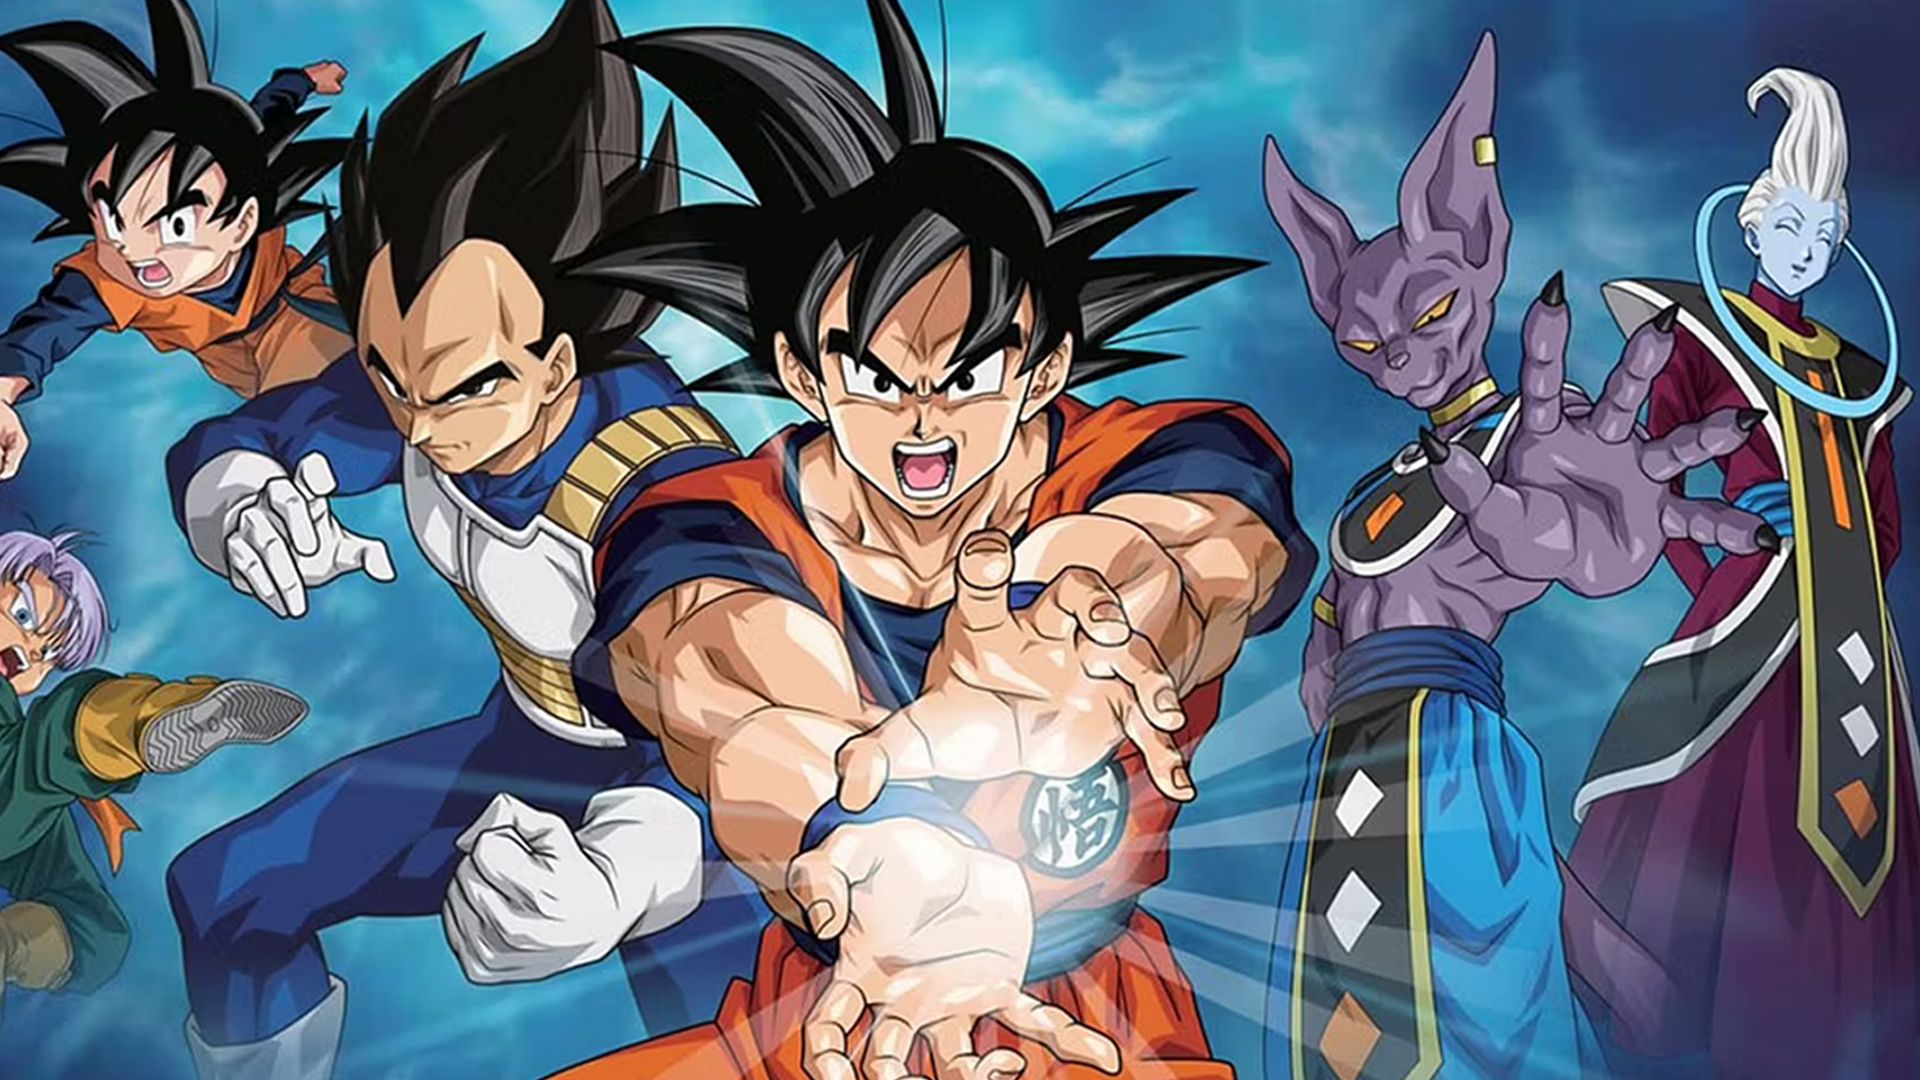 Custom Image of Goku, Vegeta, Beerus and the rest of Dragon Ball Super Cast